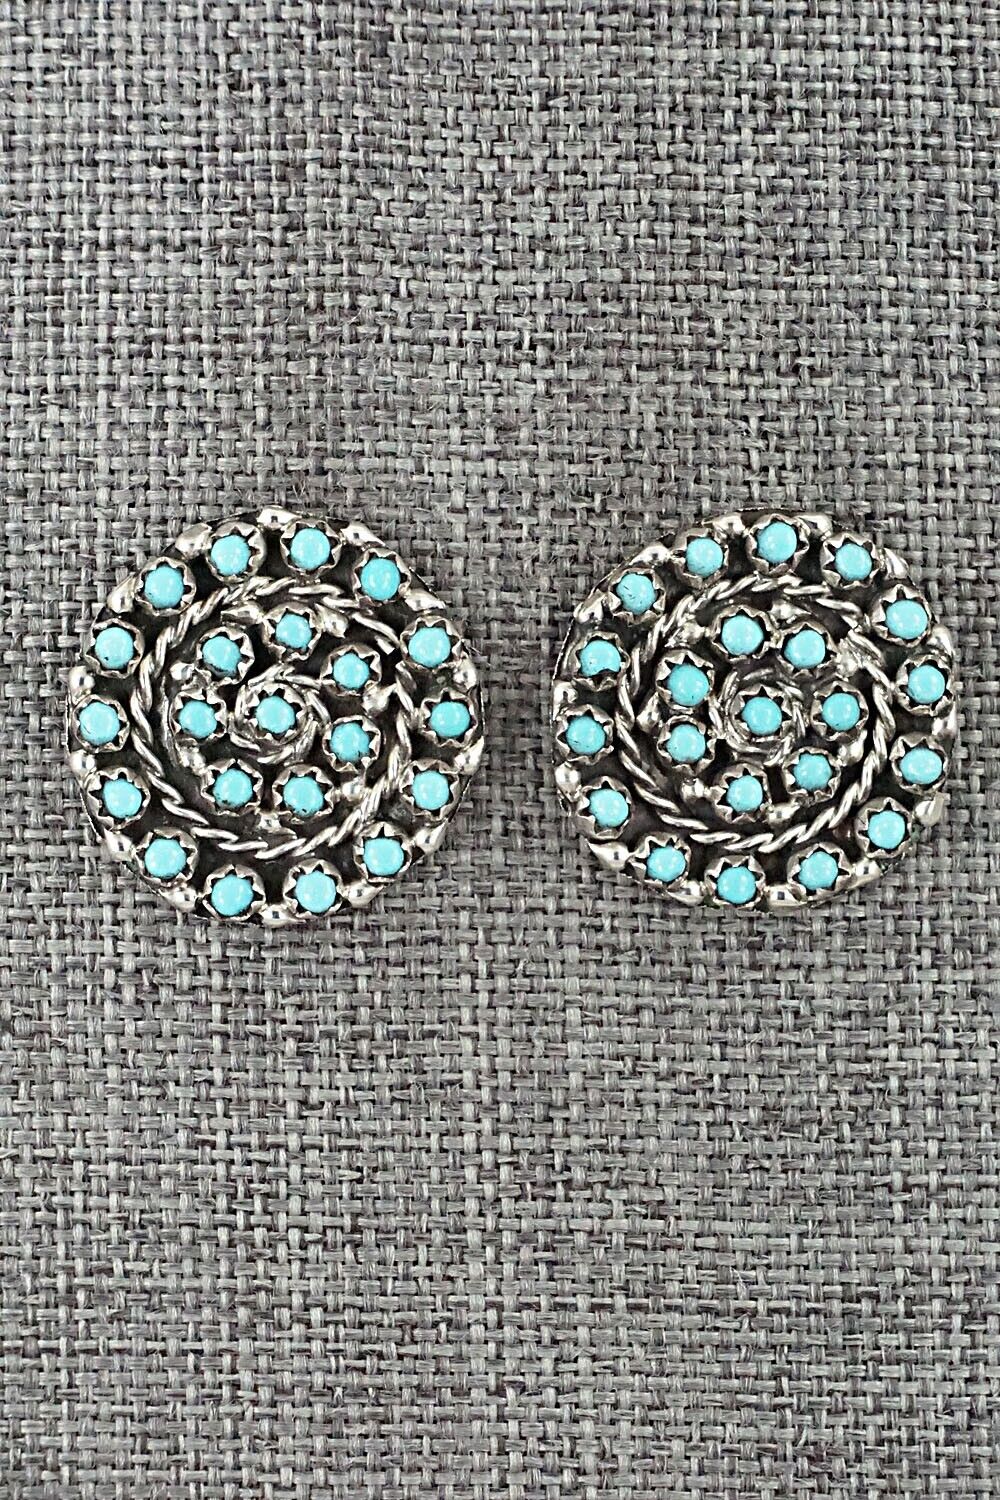 Turquoise & Sterling Silver Earrings - Randy Hooee